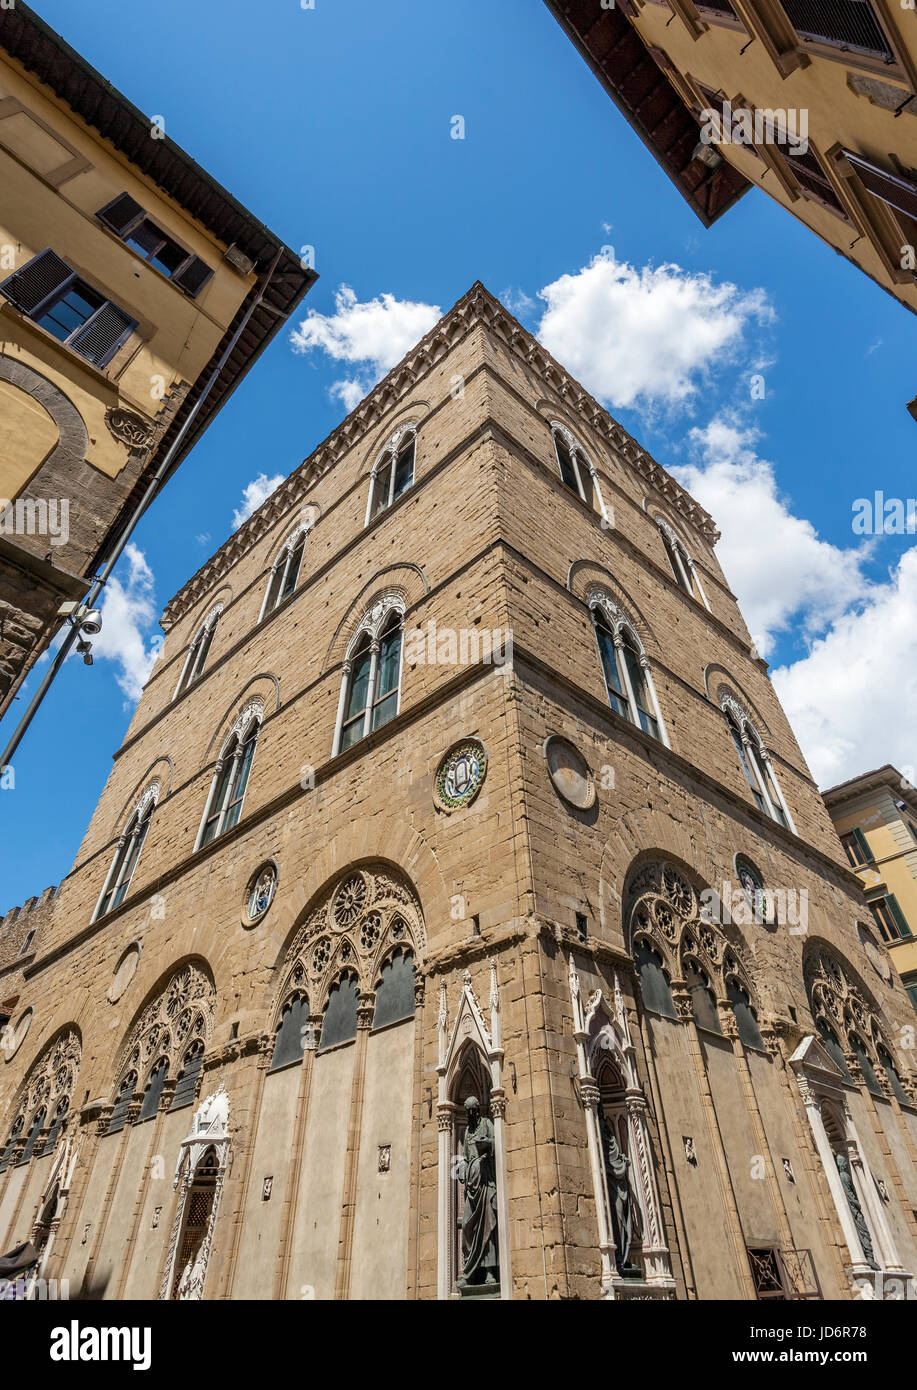 Gotische Kirche von Orsanmichele - Via dei Calzaiuoli über Arte della Lana - Florenz (Firenze), Toskana, Italien, Europa Stockfoto